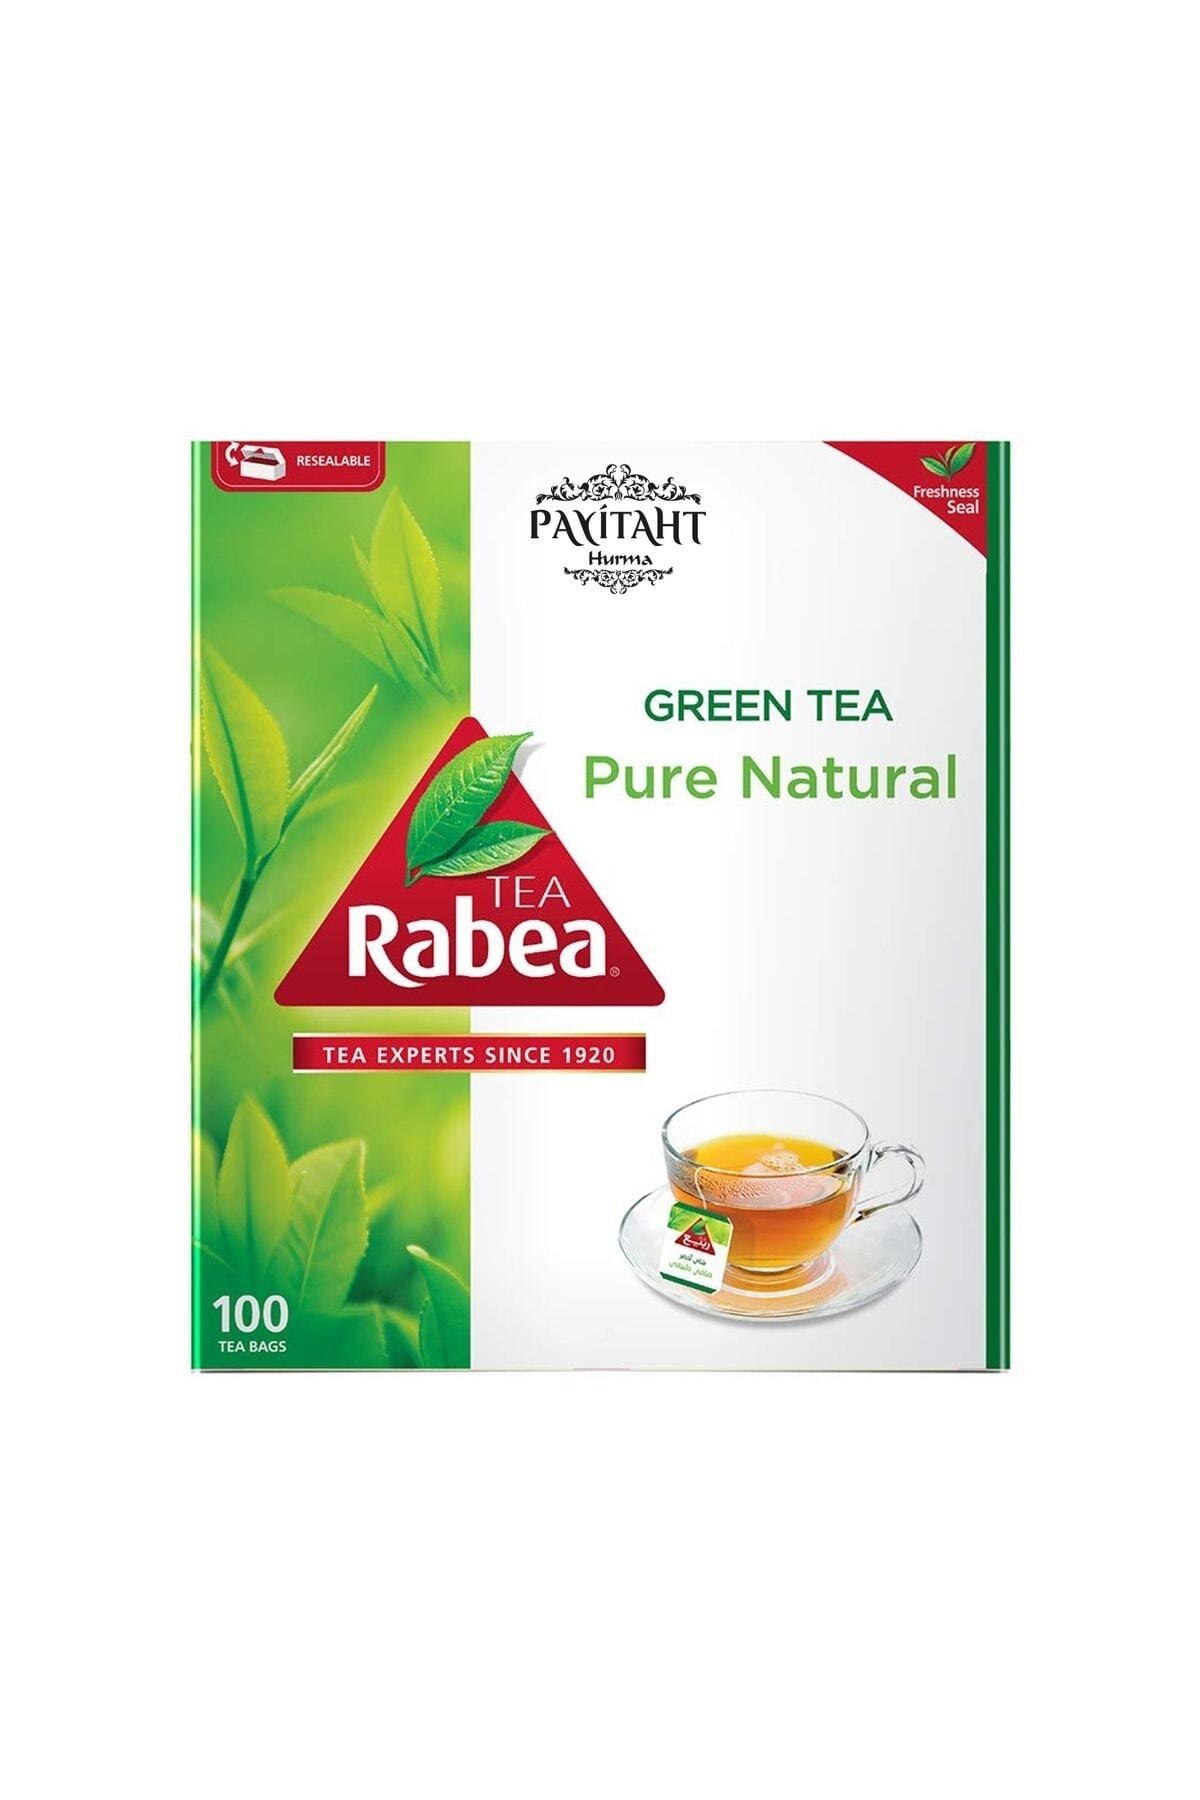 payitaht hurma Rabea Tea Pure Natural 100 Tea Bags - Green Tea Bardak Sallama Yeşil Çay 100 Poşet